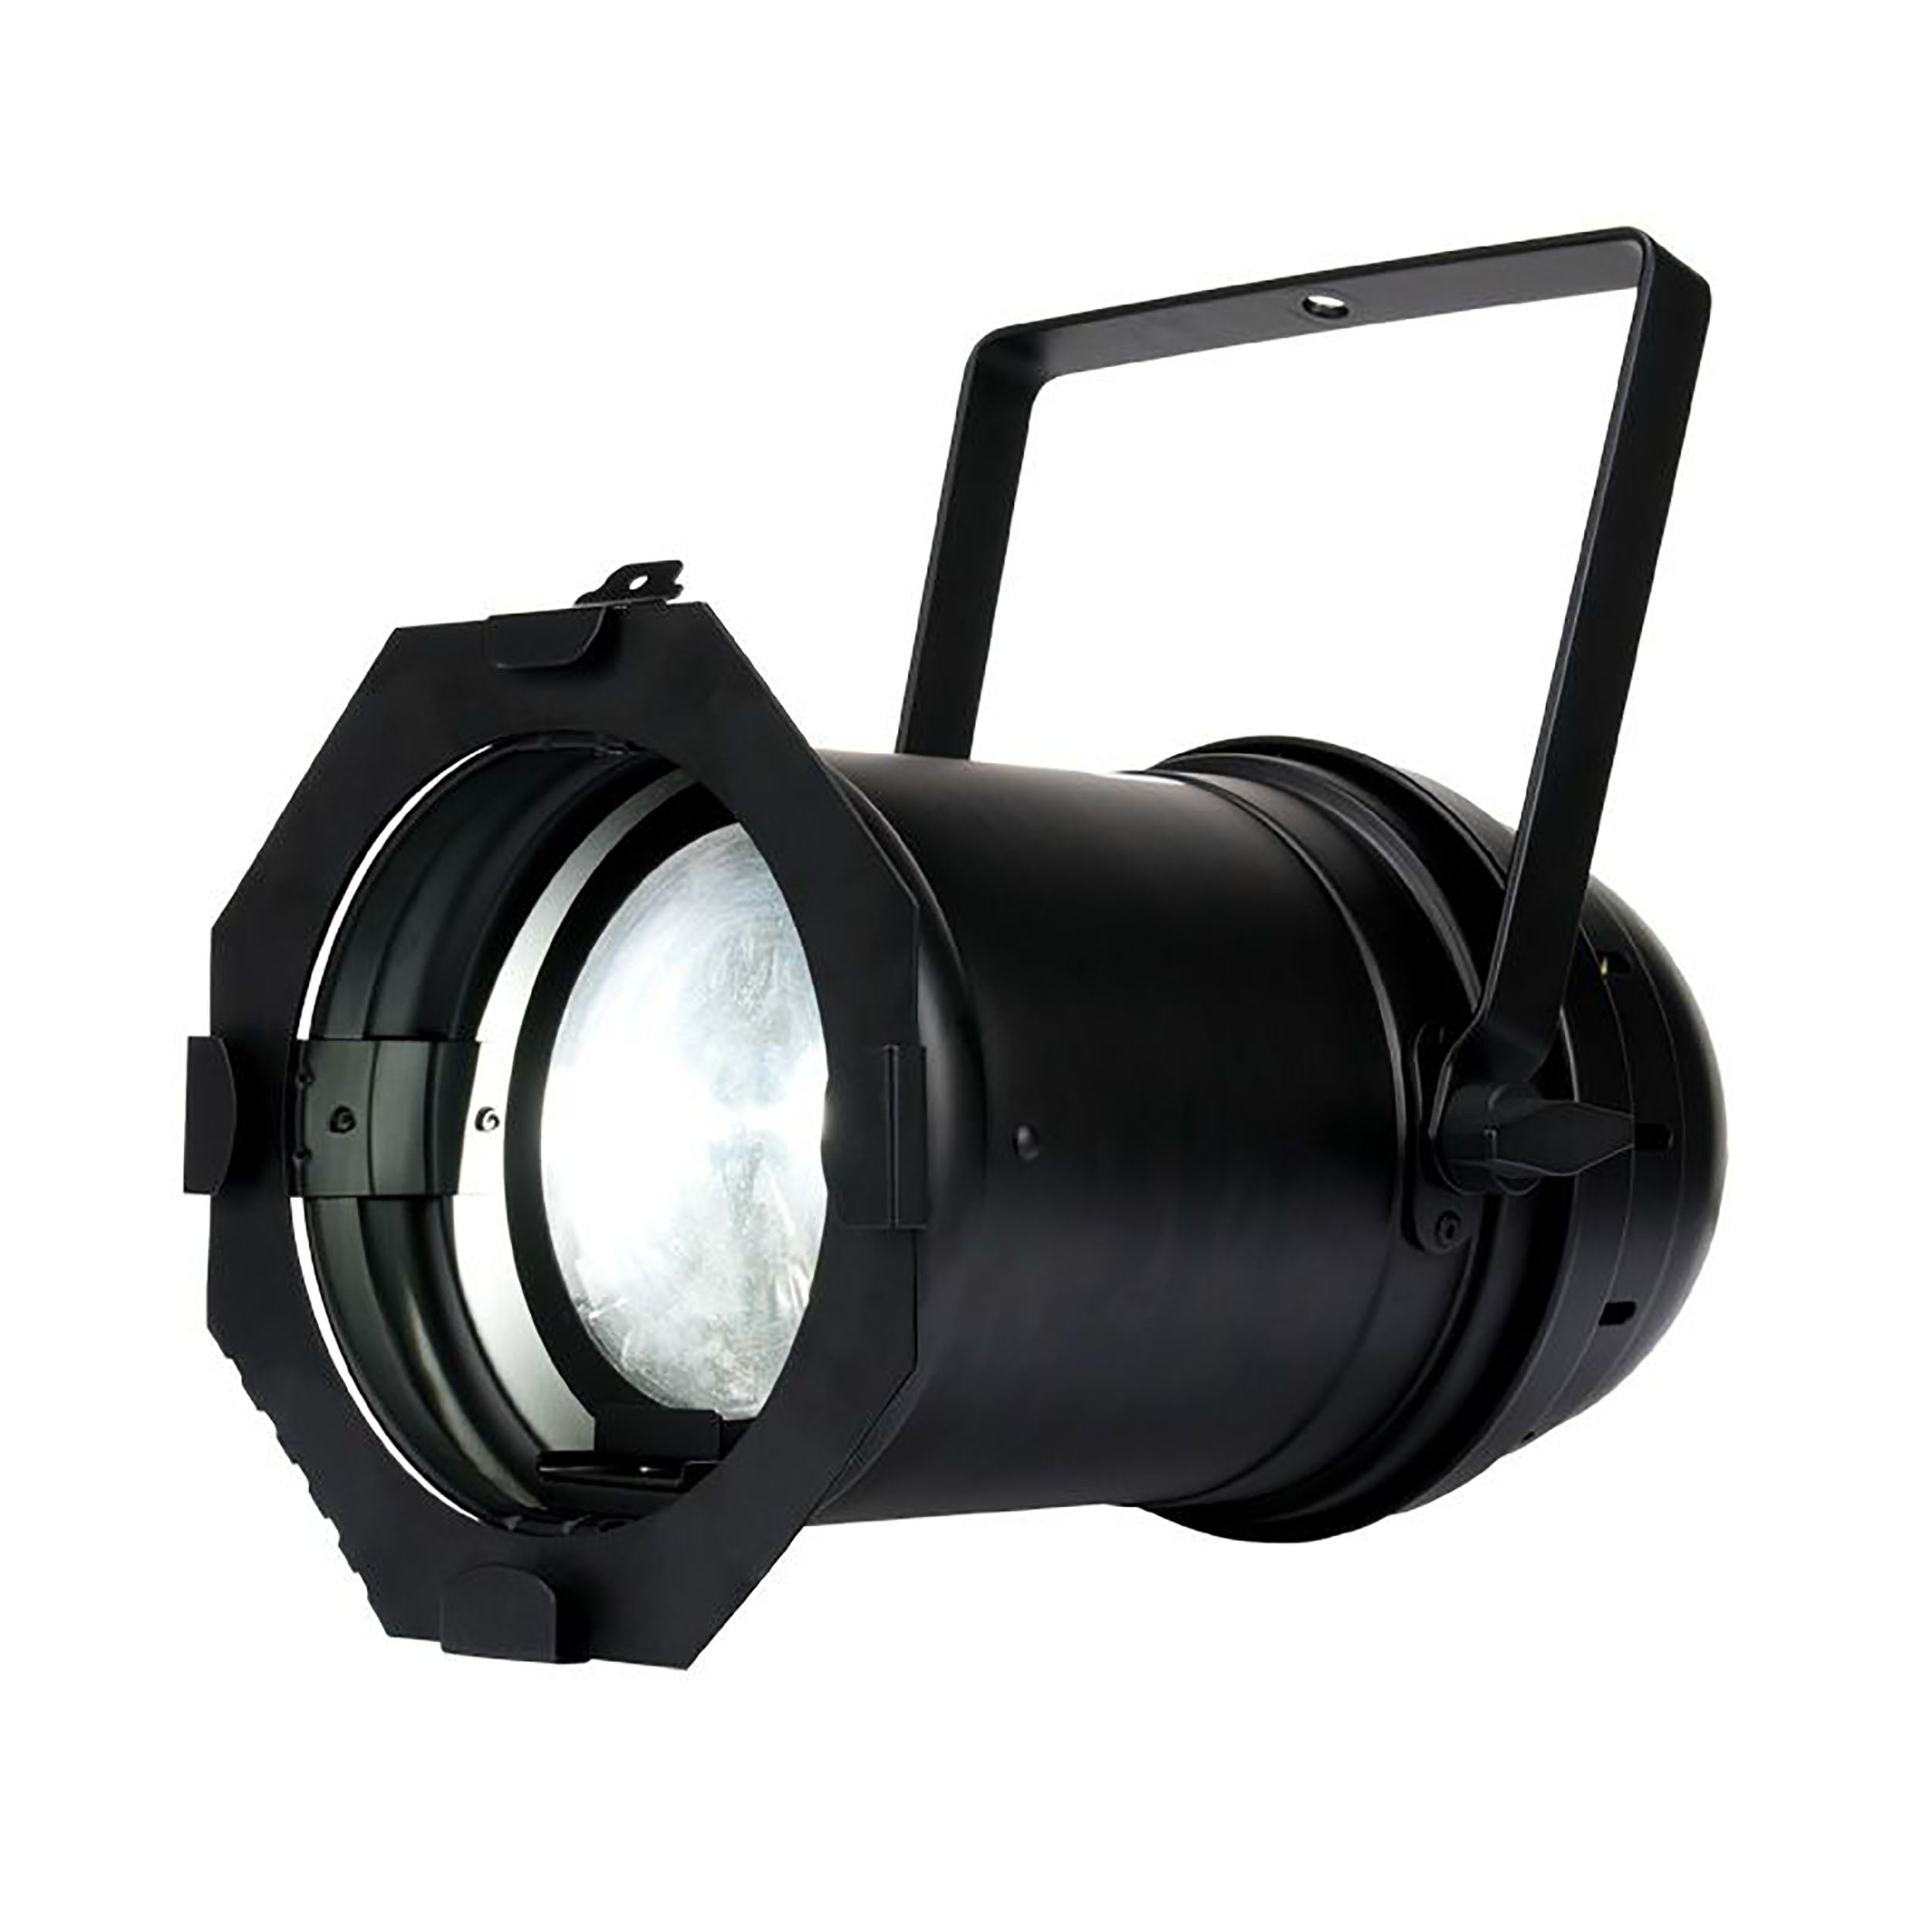 ADJ PAR Z100 5k, 100-Watt COB Cool White LED (5700K) - Black by ADJ